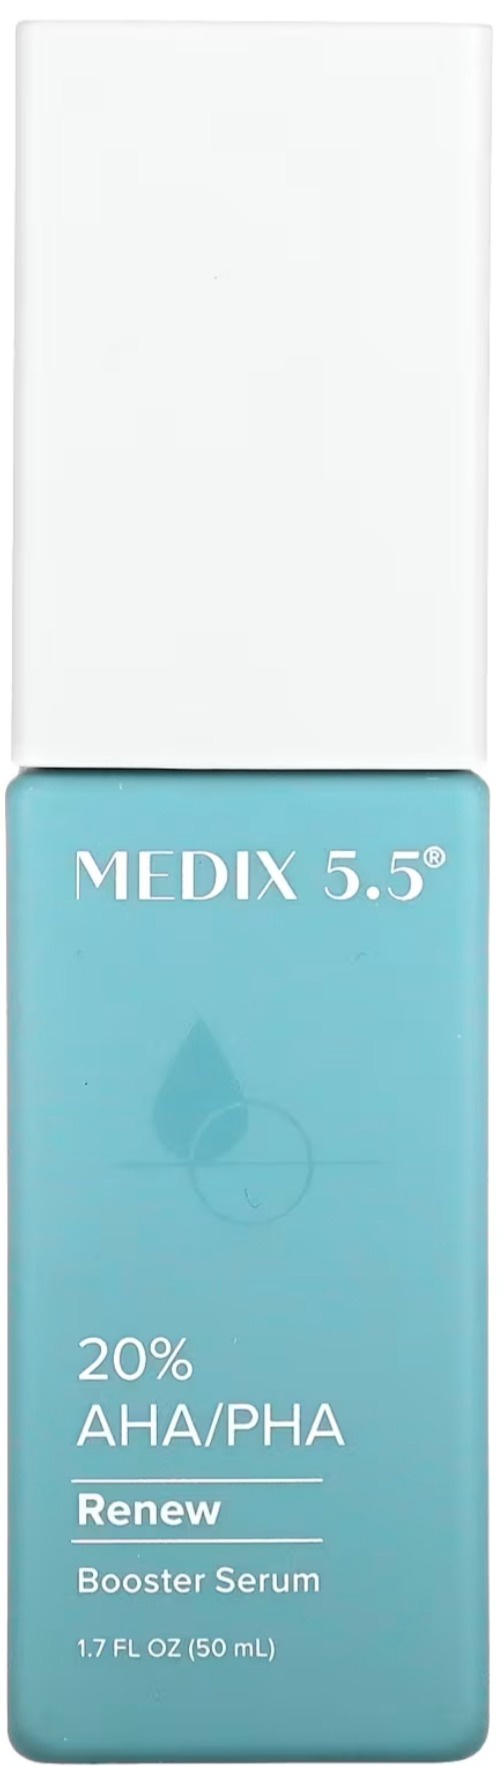 Medix 5.5 Booster Serum 20% AHA/PHA